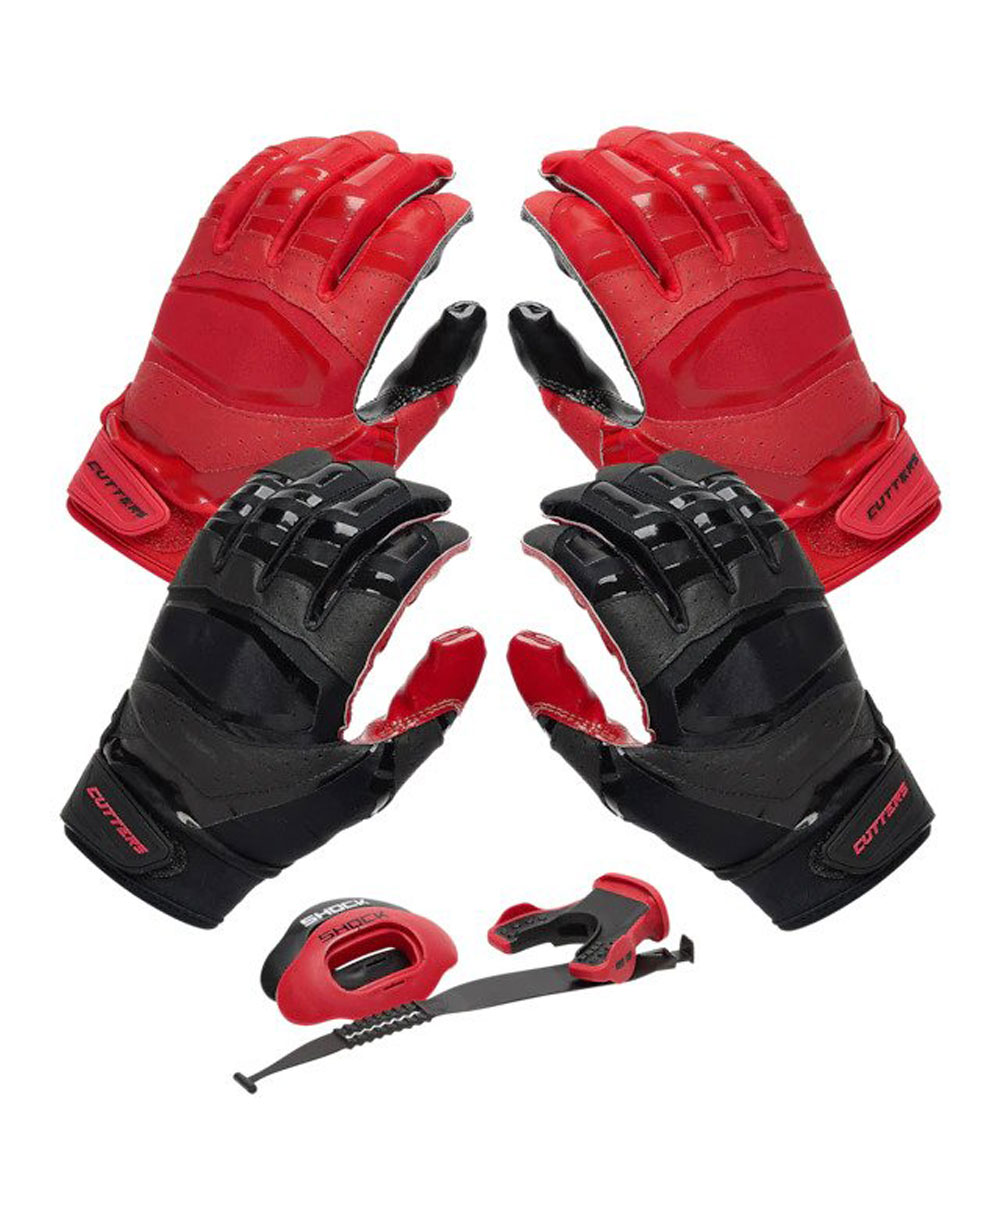 Cutters Rev Pro 5.0 Receiver Gloves, Black / S